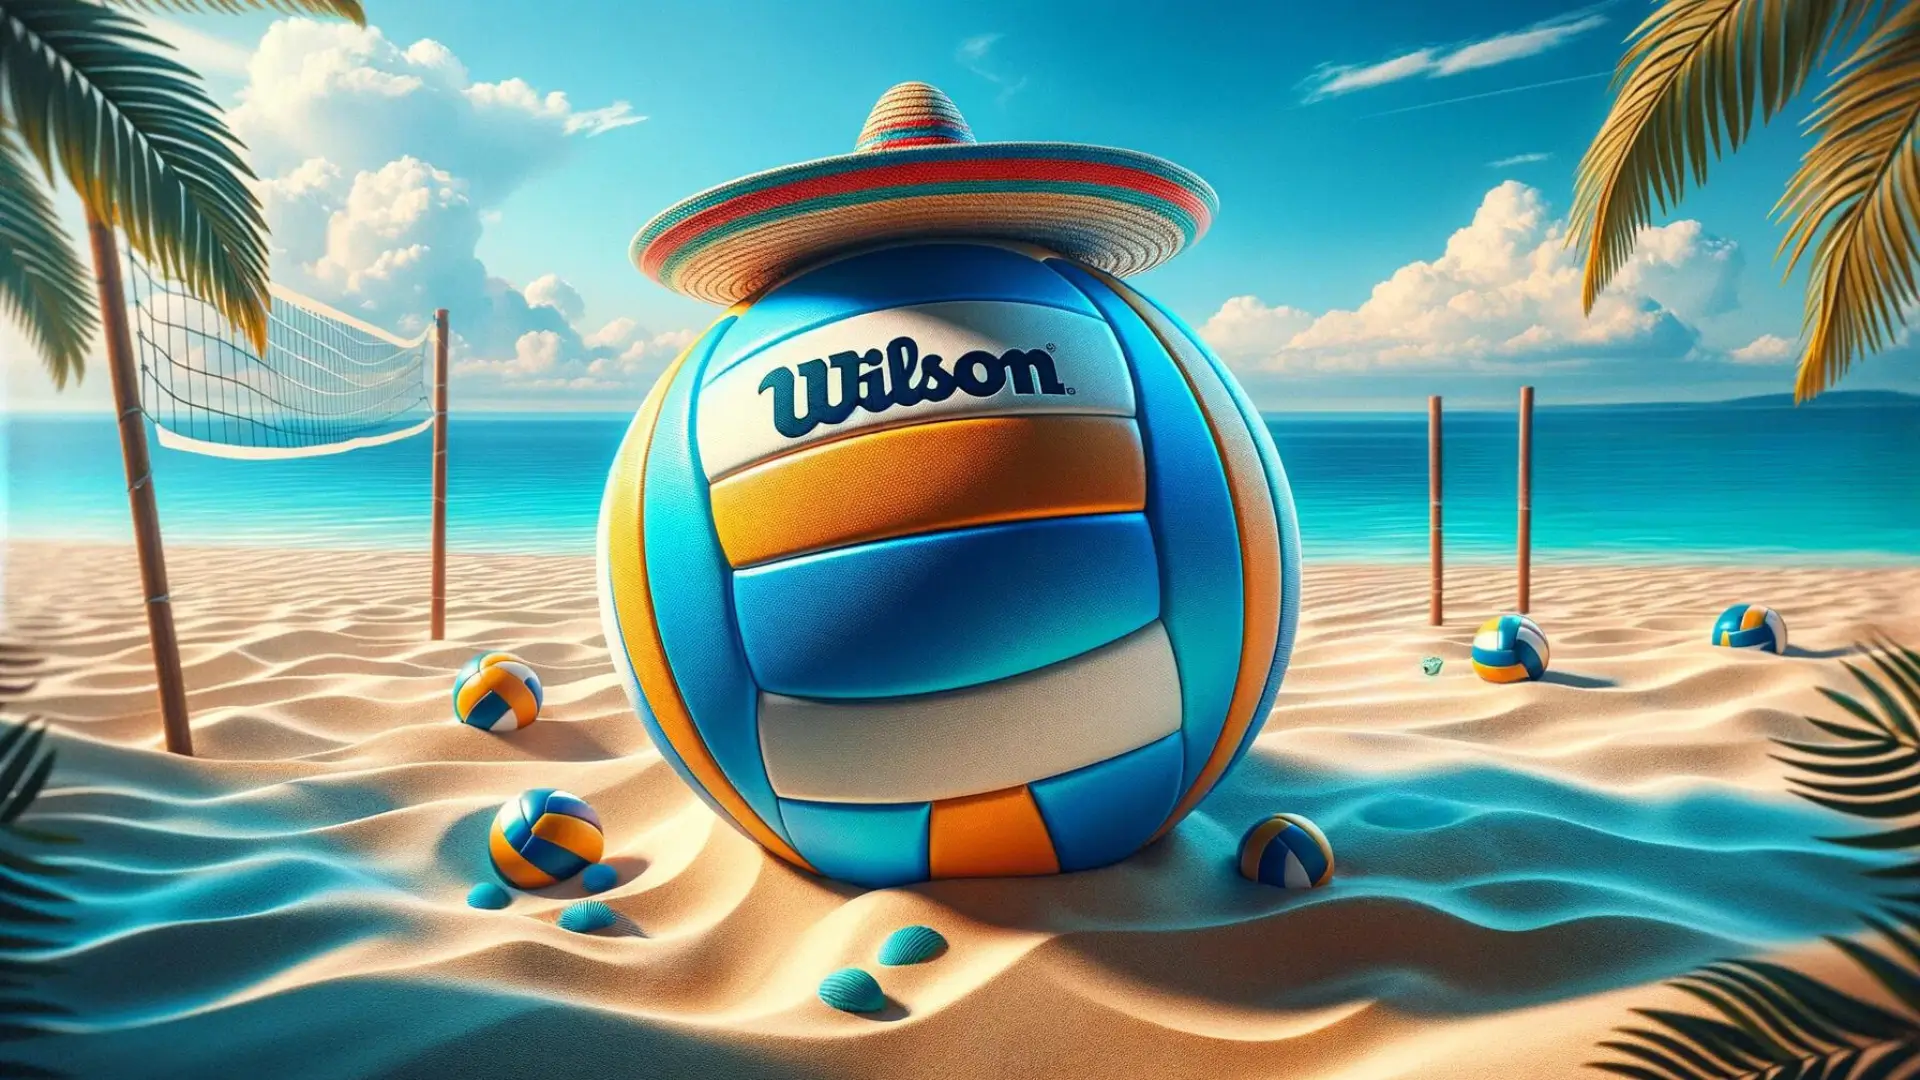 wilson beach volleyball